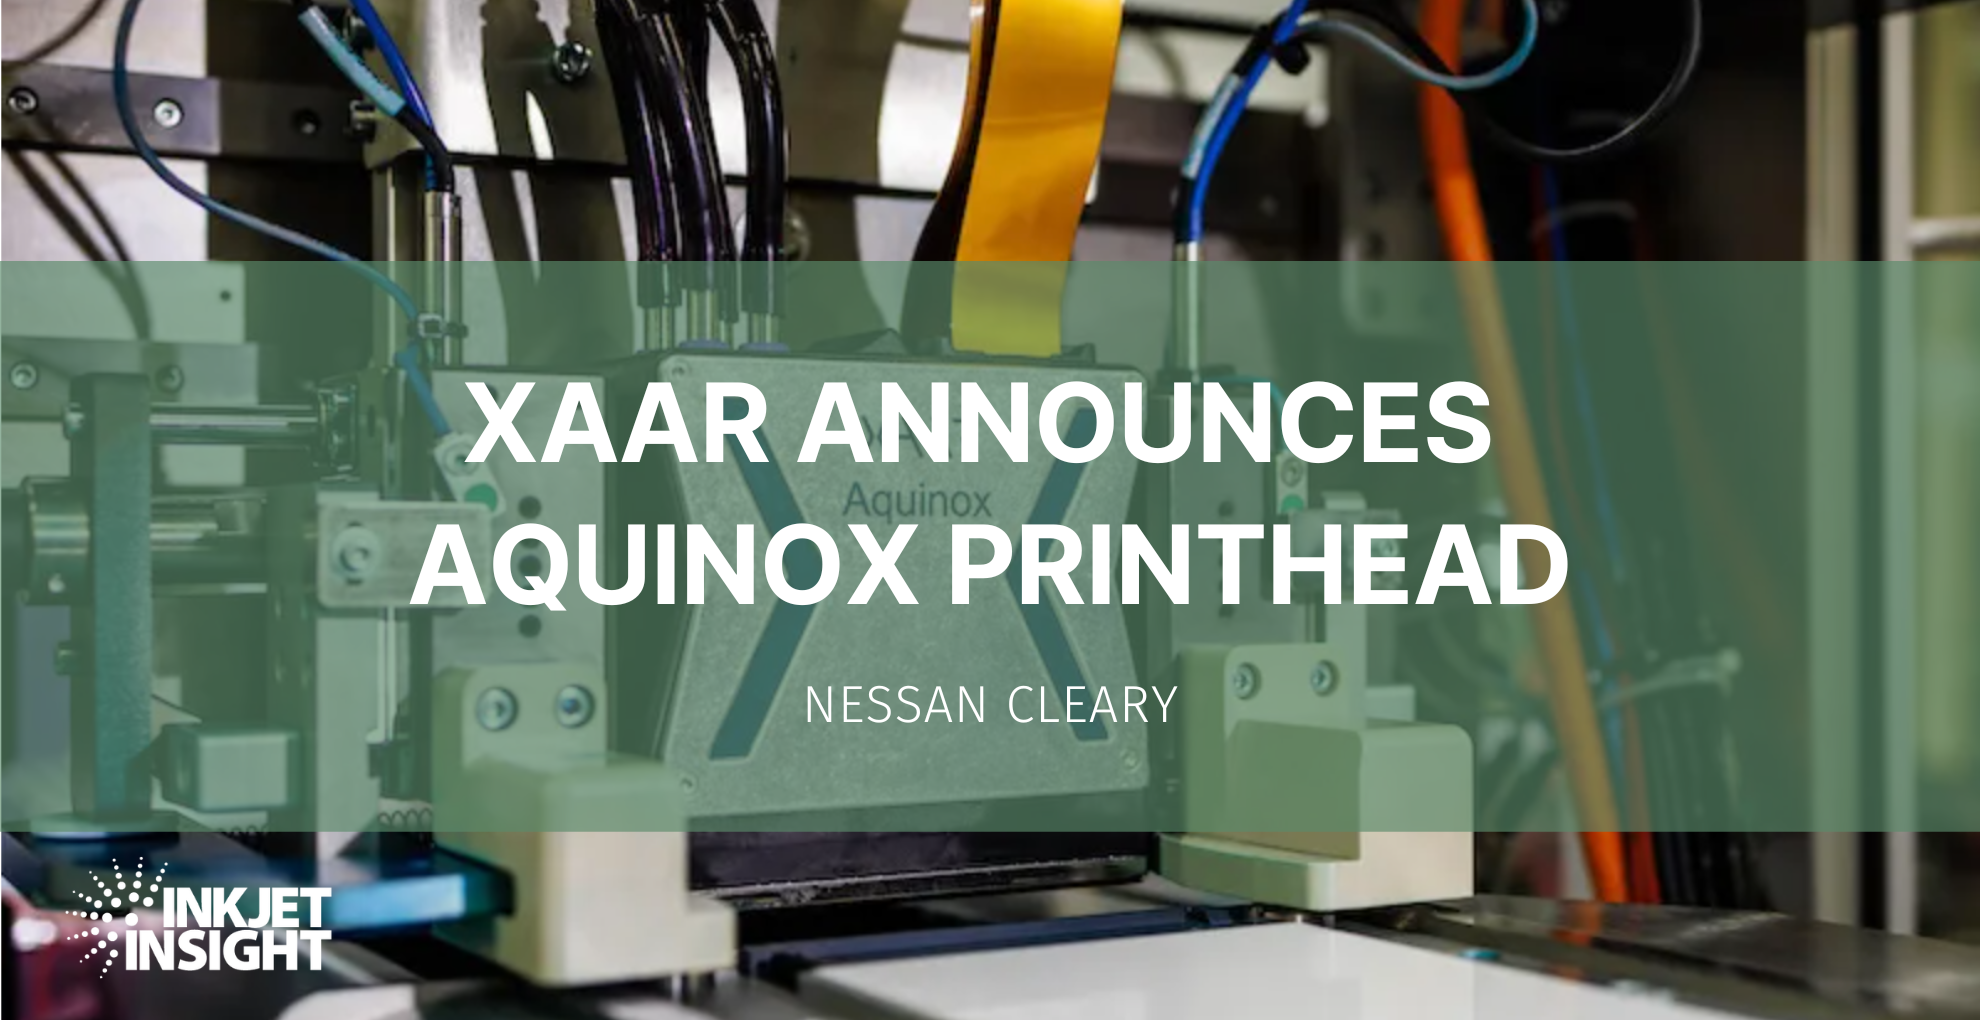 Featured image for “Xaar Announces Aquinox Printhead”